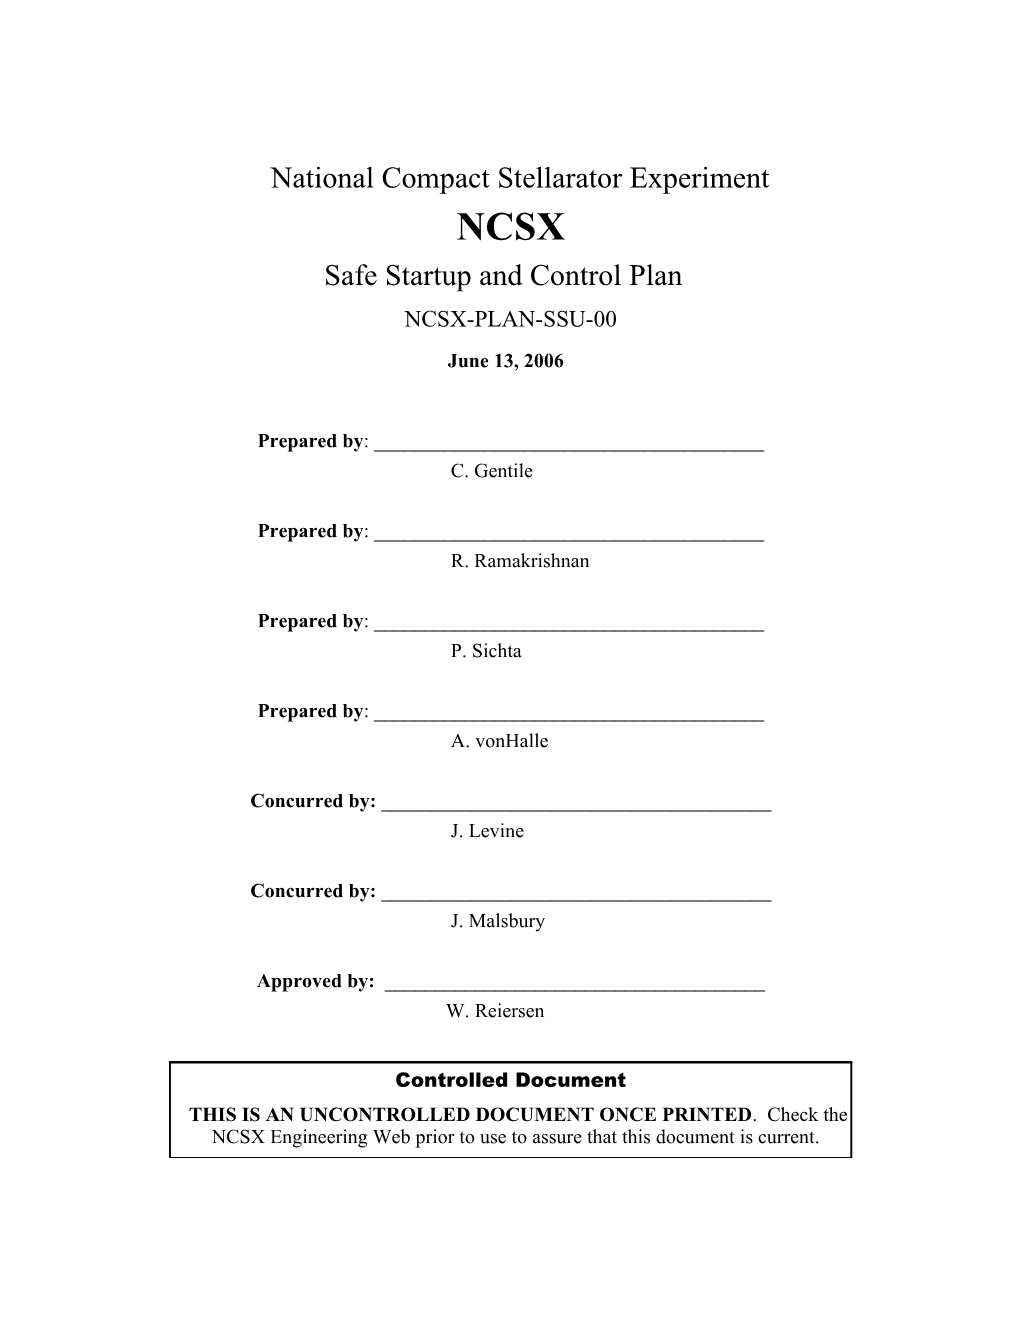 NSTX Documentation & Records Plan